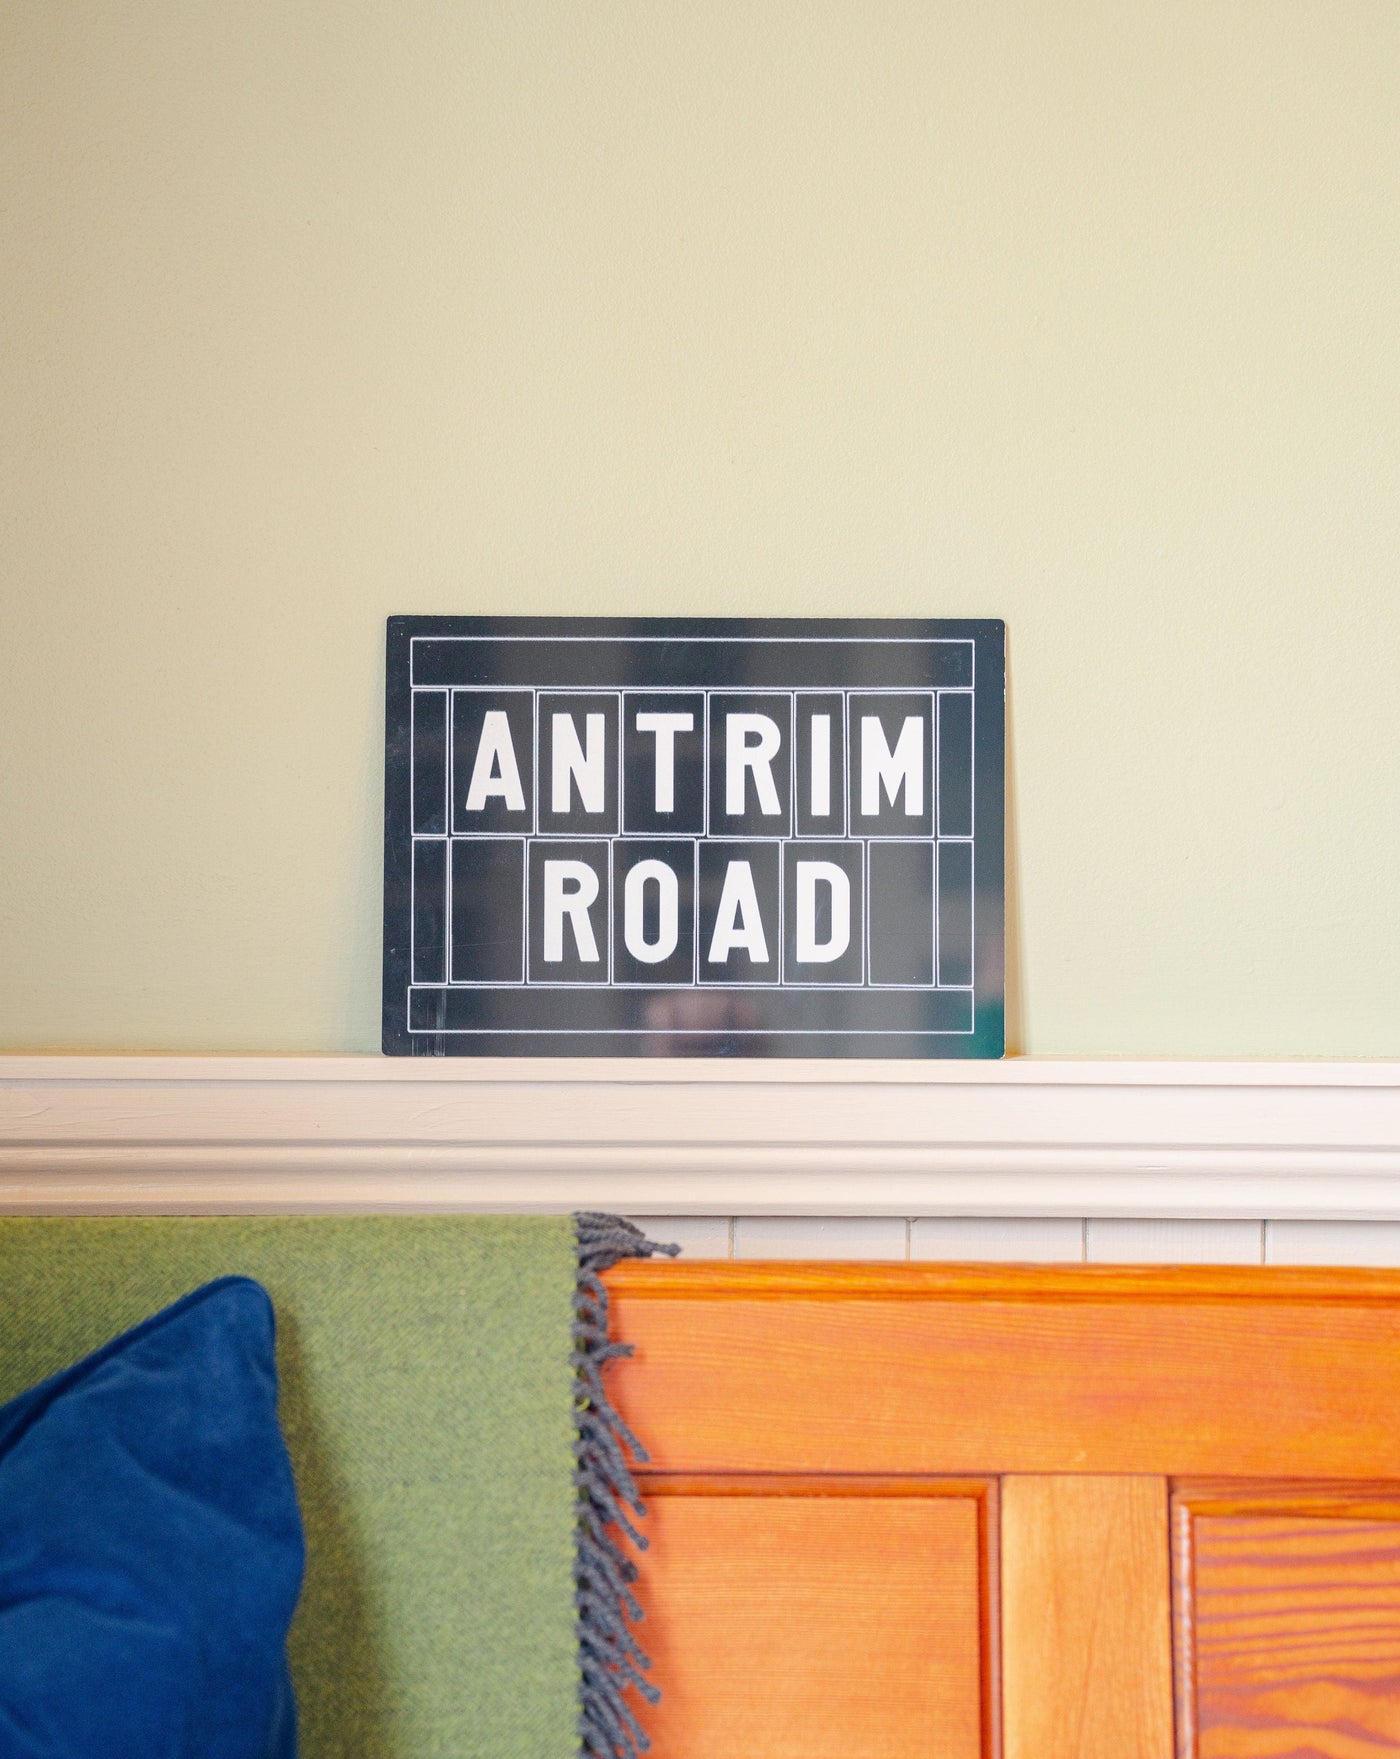 Antrim Road Street Sign